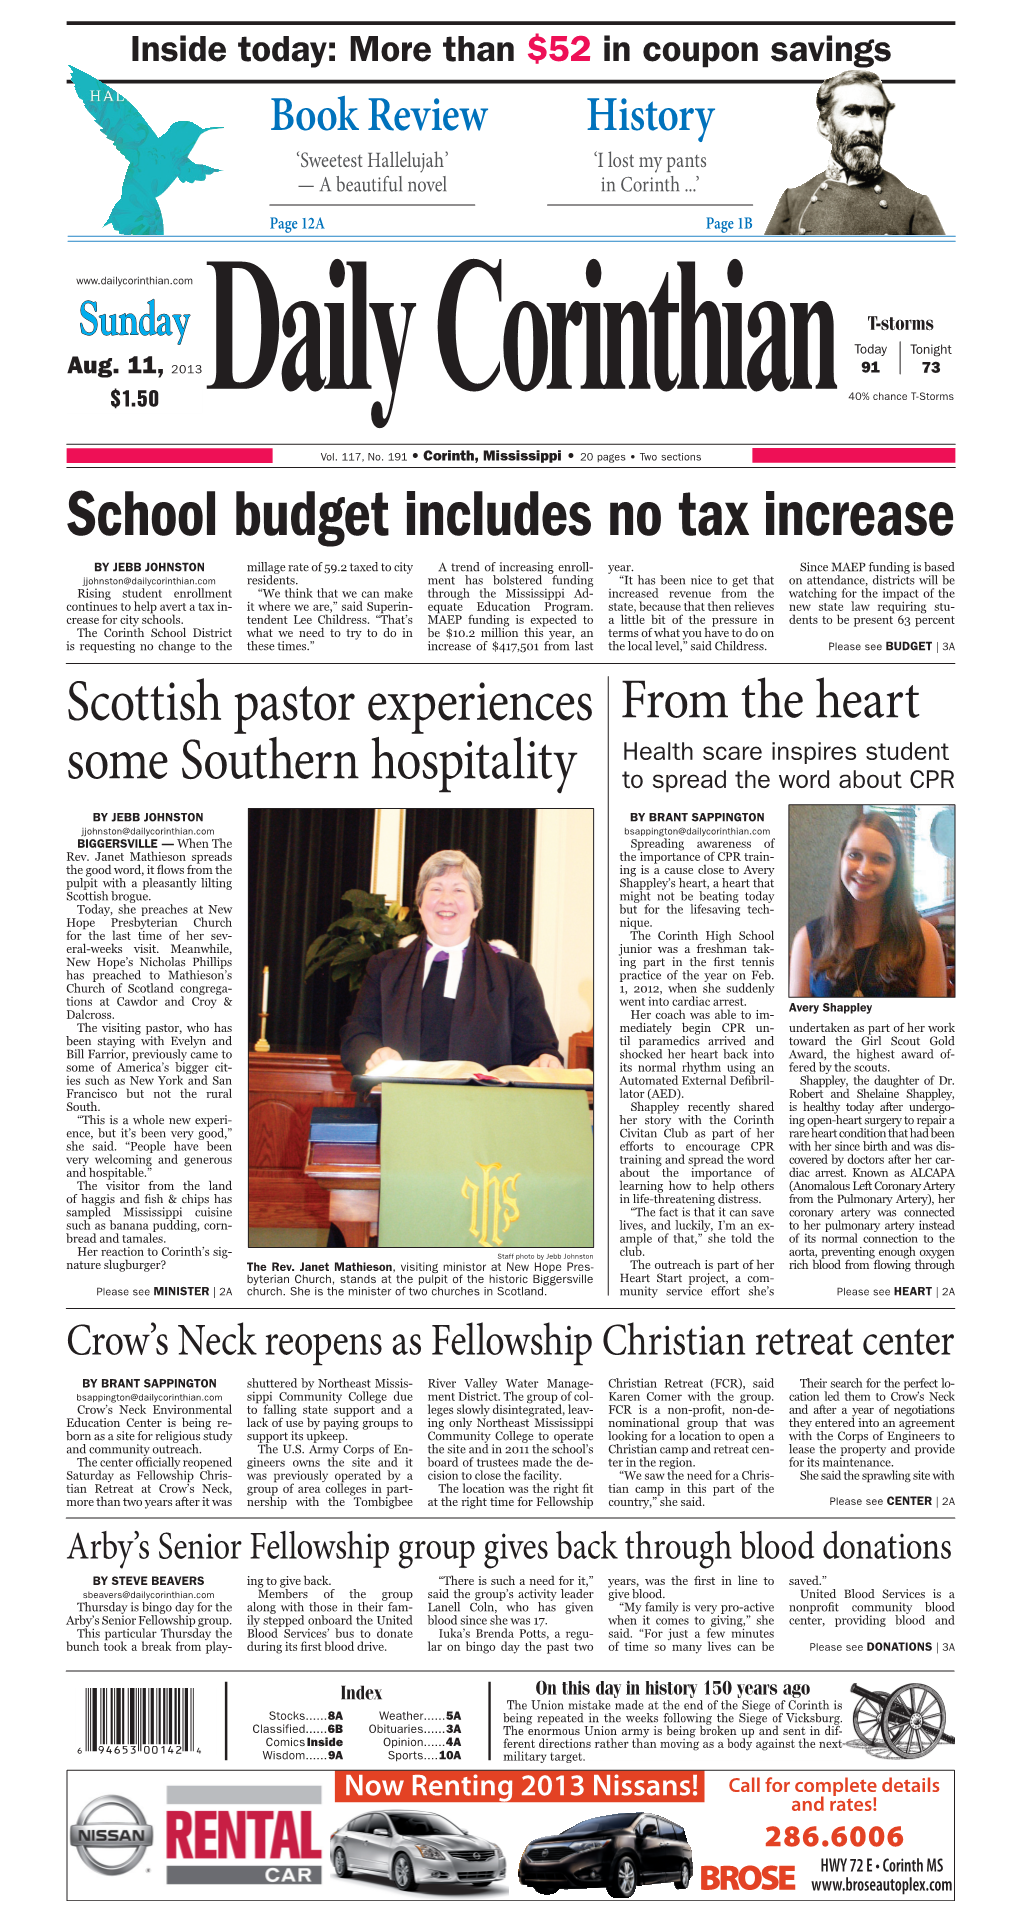 School Budget Includes No Tax Increase